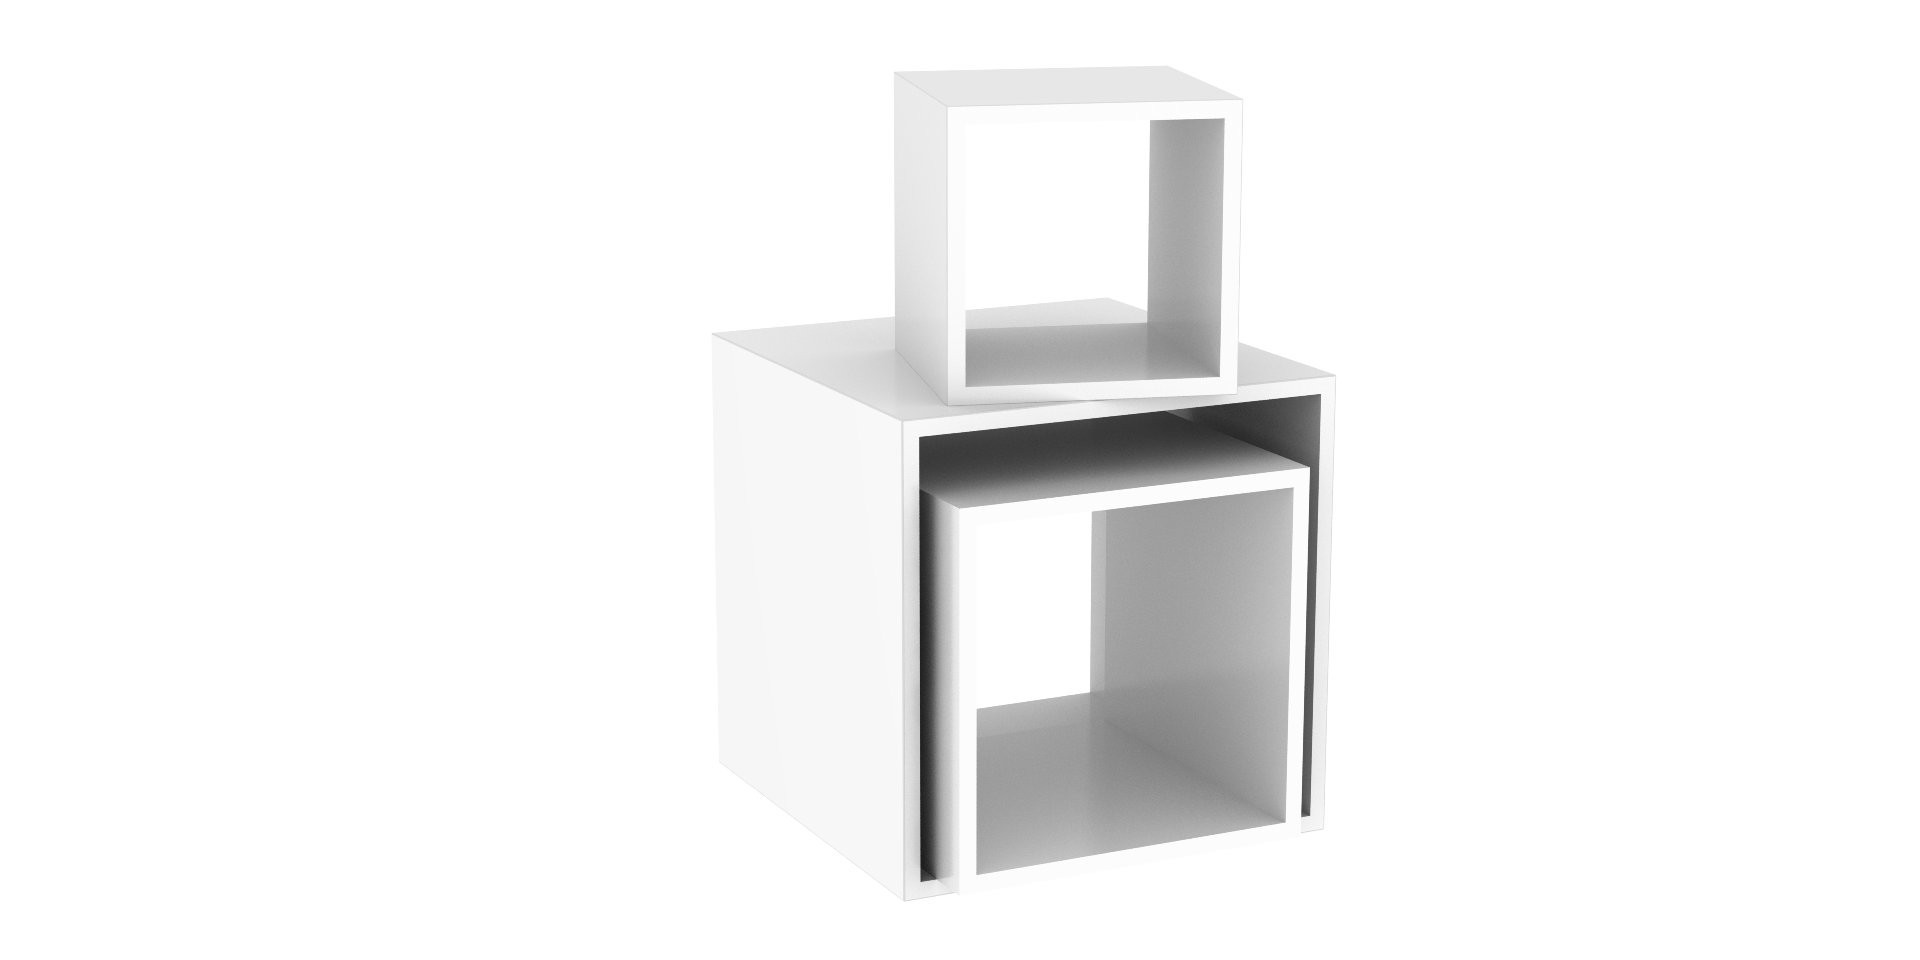 Expositor de 4 estantes blanco con madera abedul 108x44x39 cm